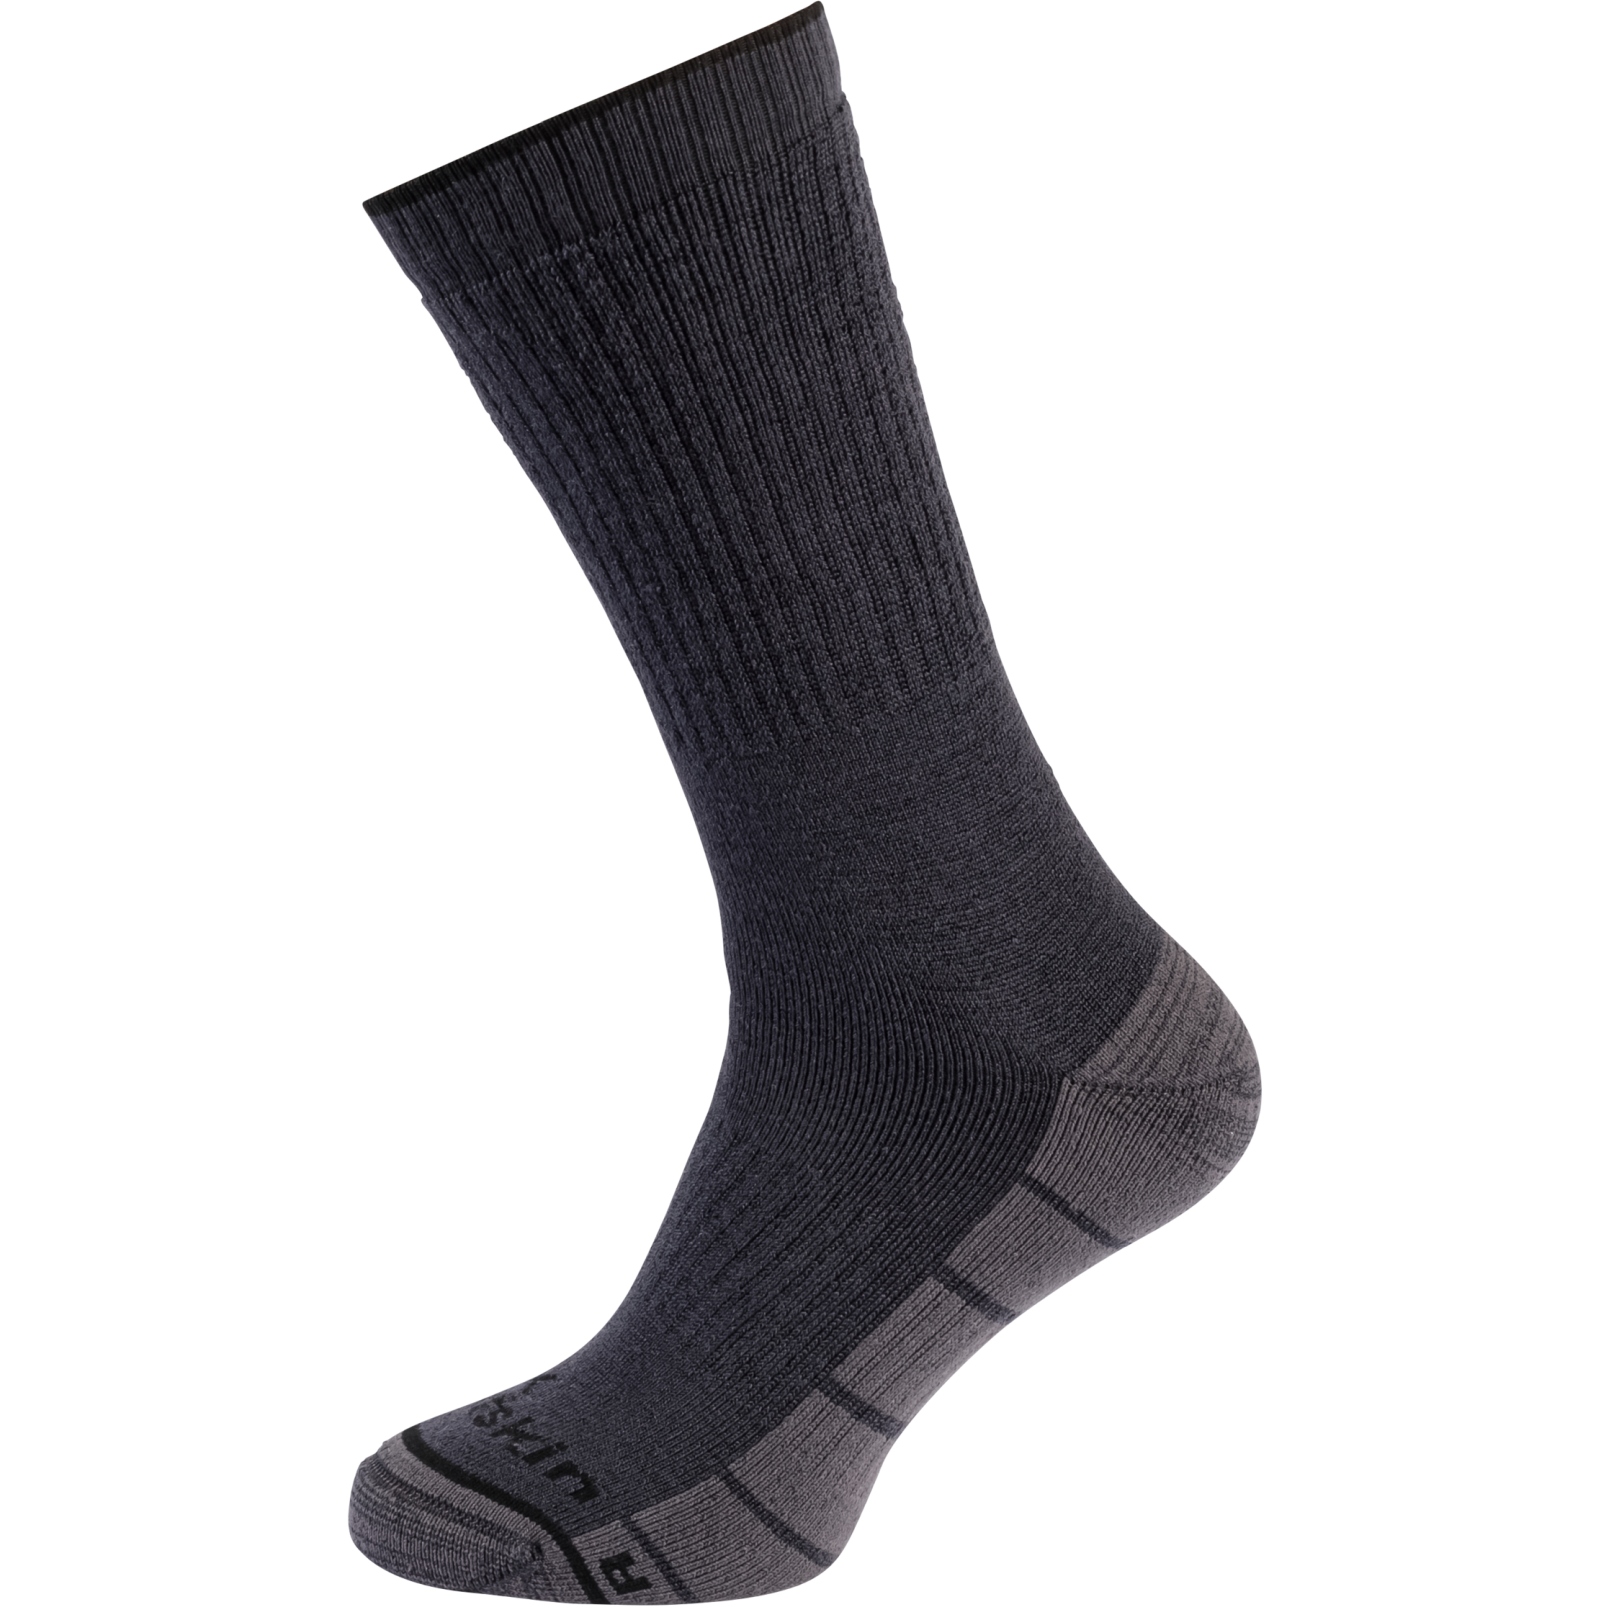 Jack Wolfskin Trekking Merino Classic Cut Socks - dark grey | BIKE24